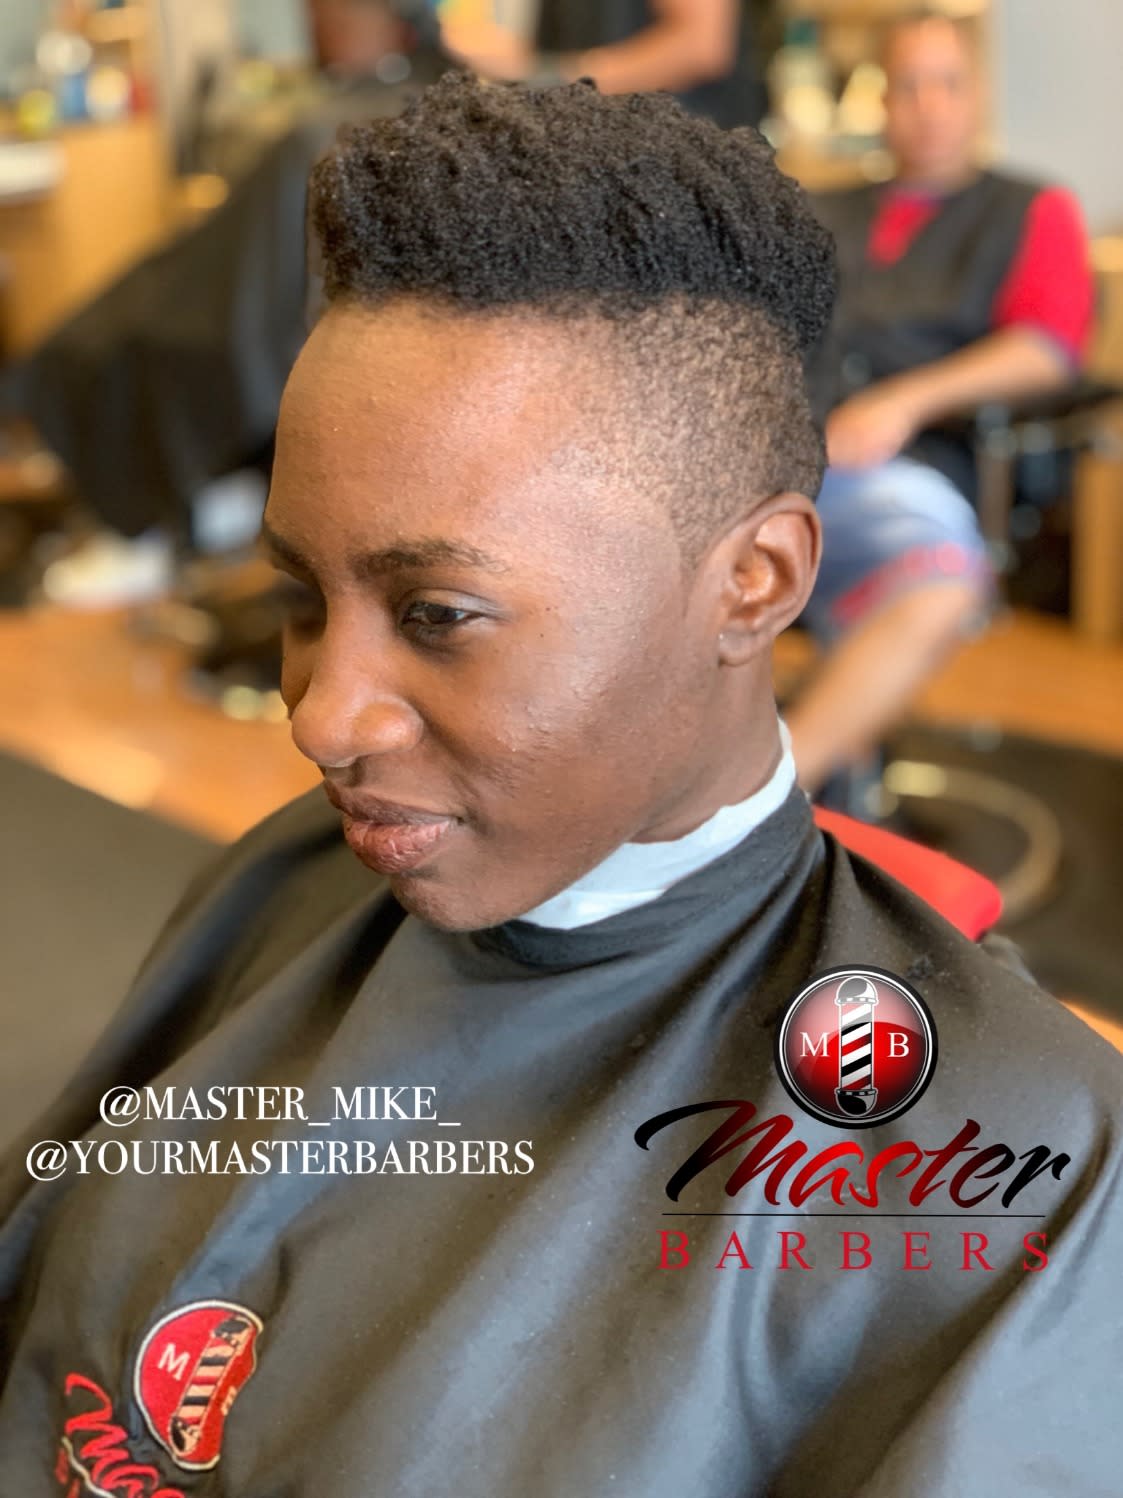 Master Barbers Photo